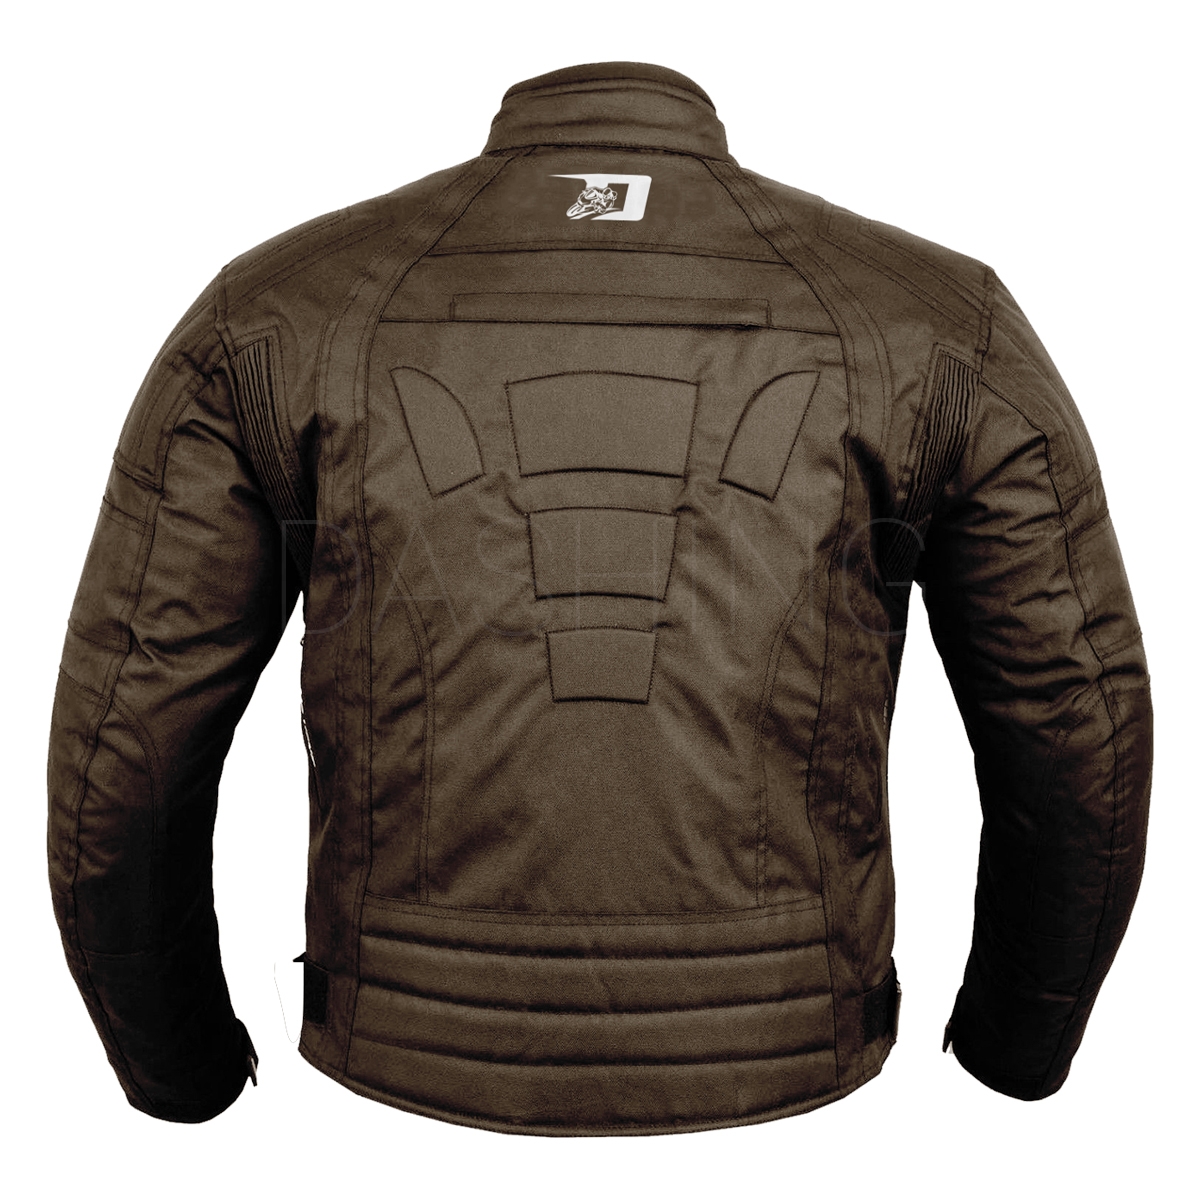 Cordura Motorbike jacket